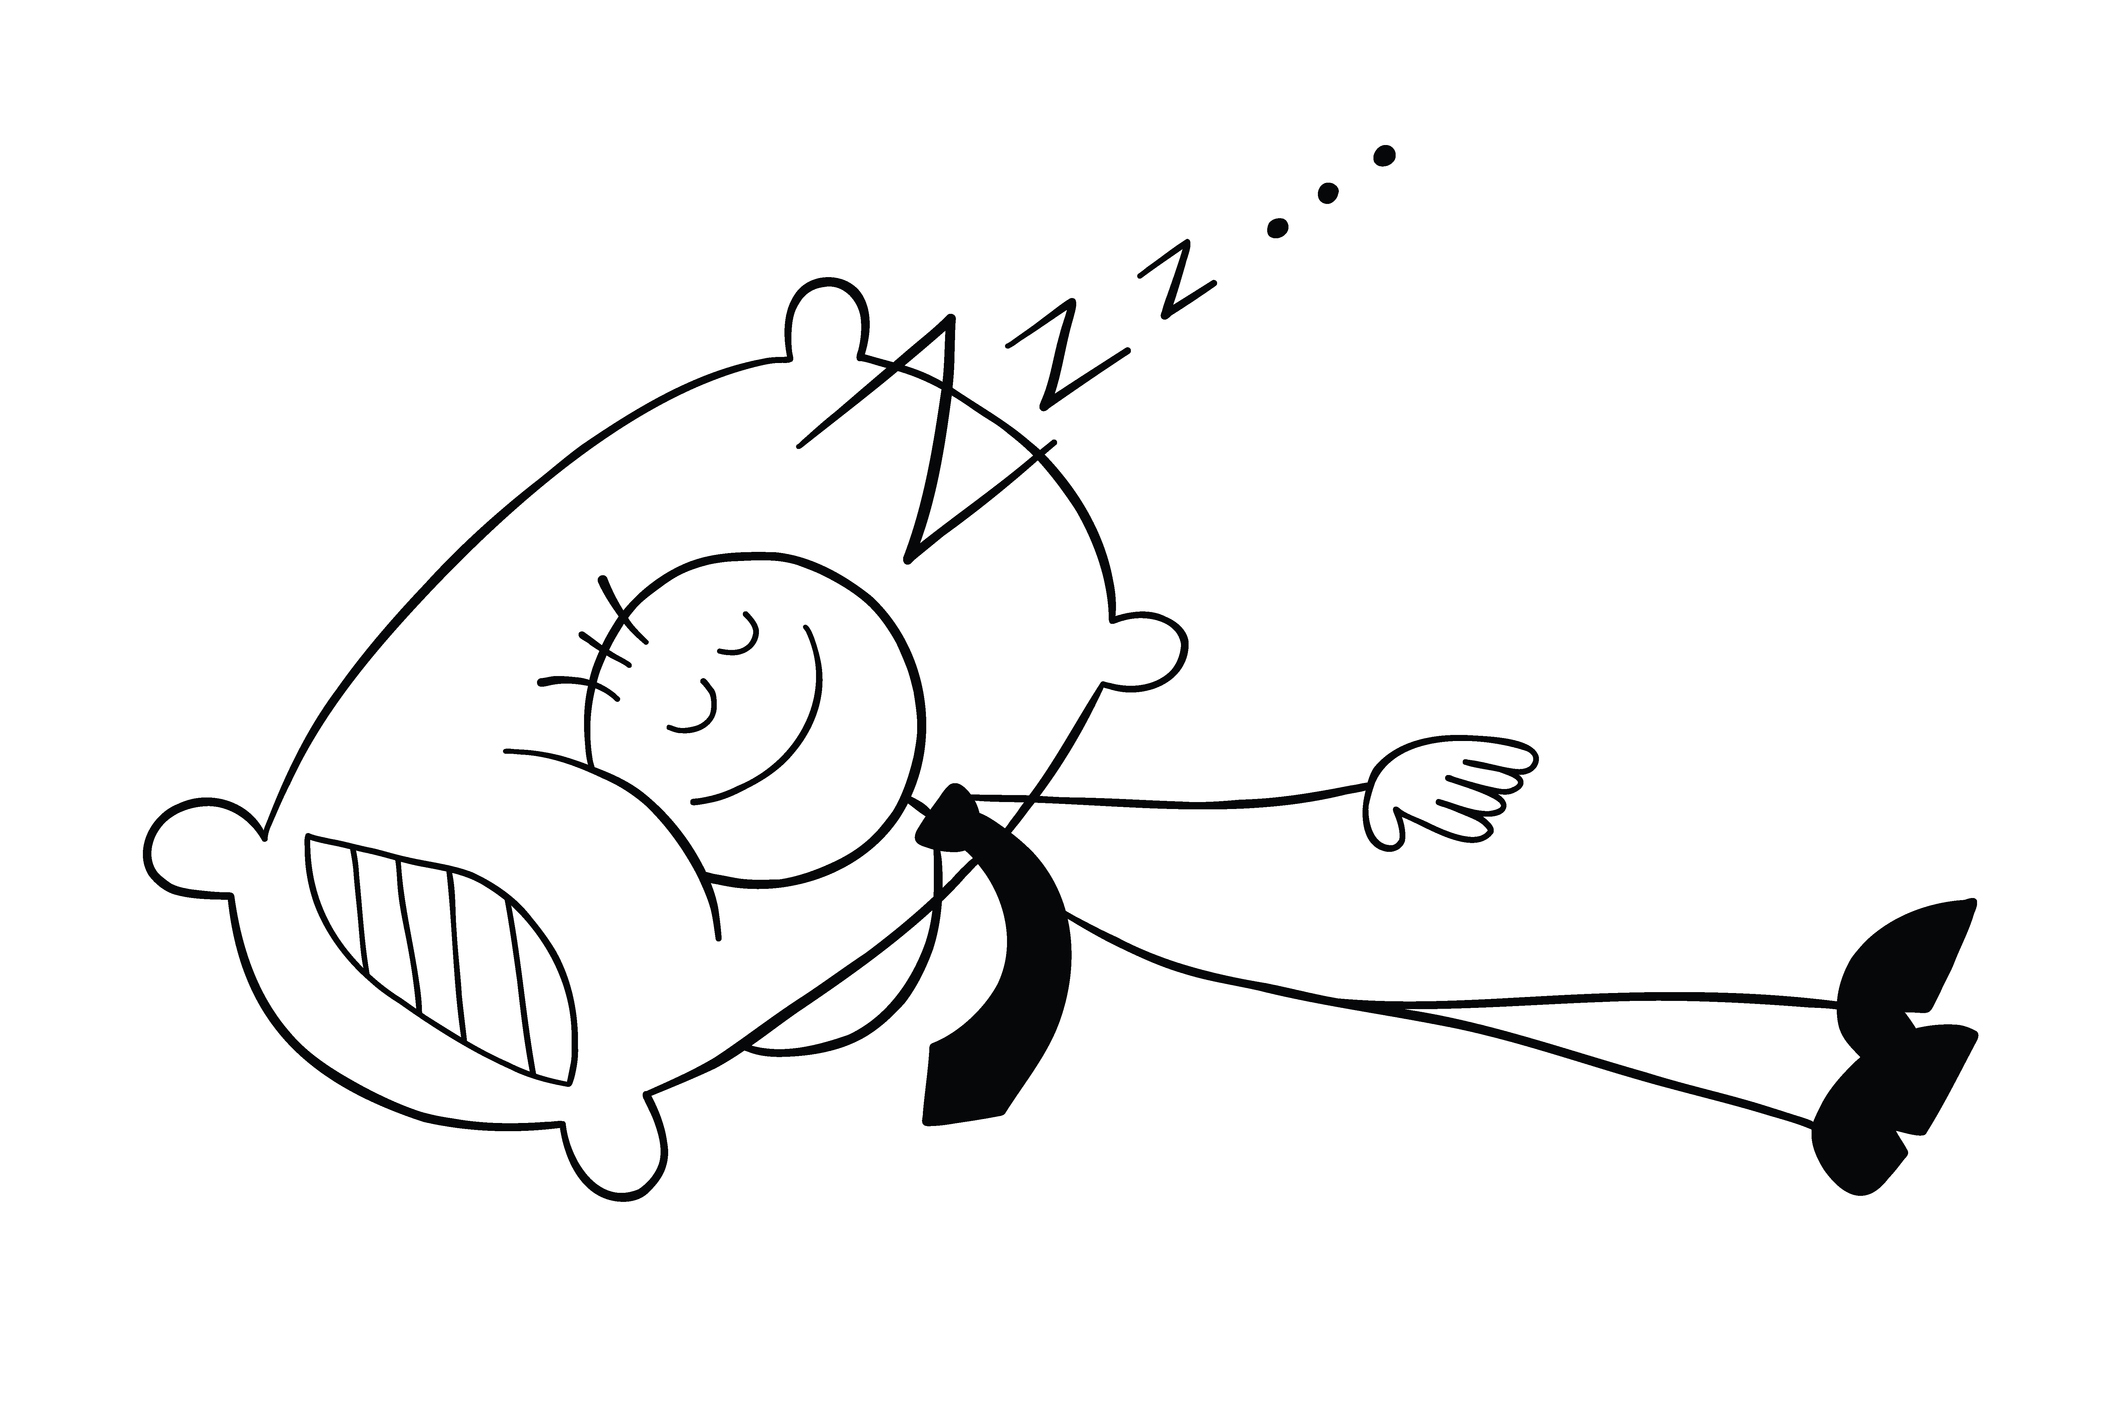 Stickman businessman character sleeps with a pillow, vector cartoon illustration